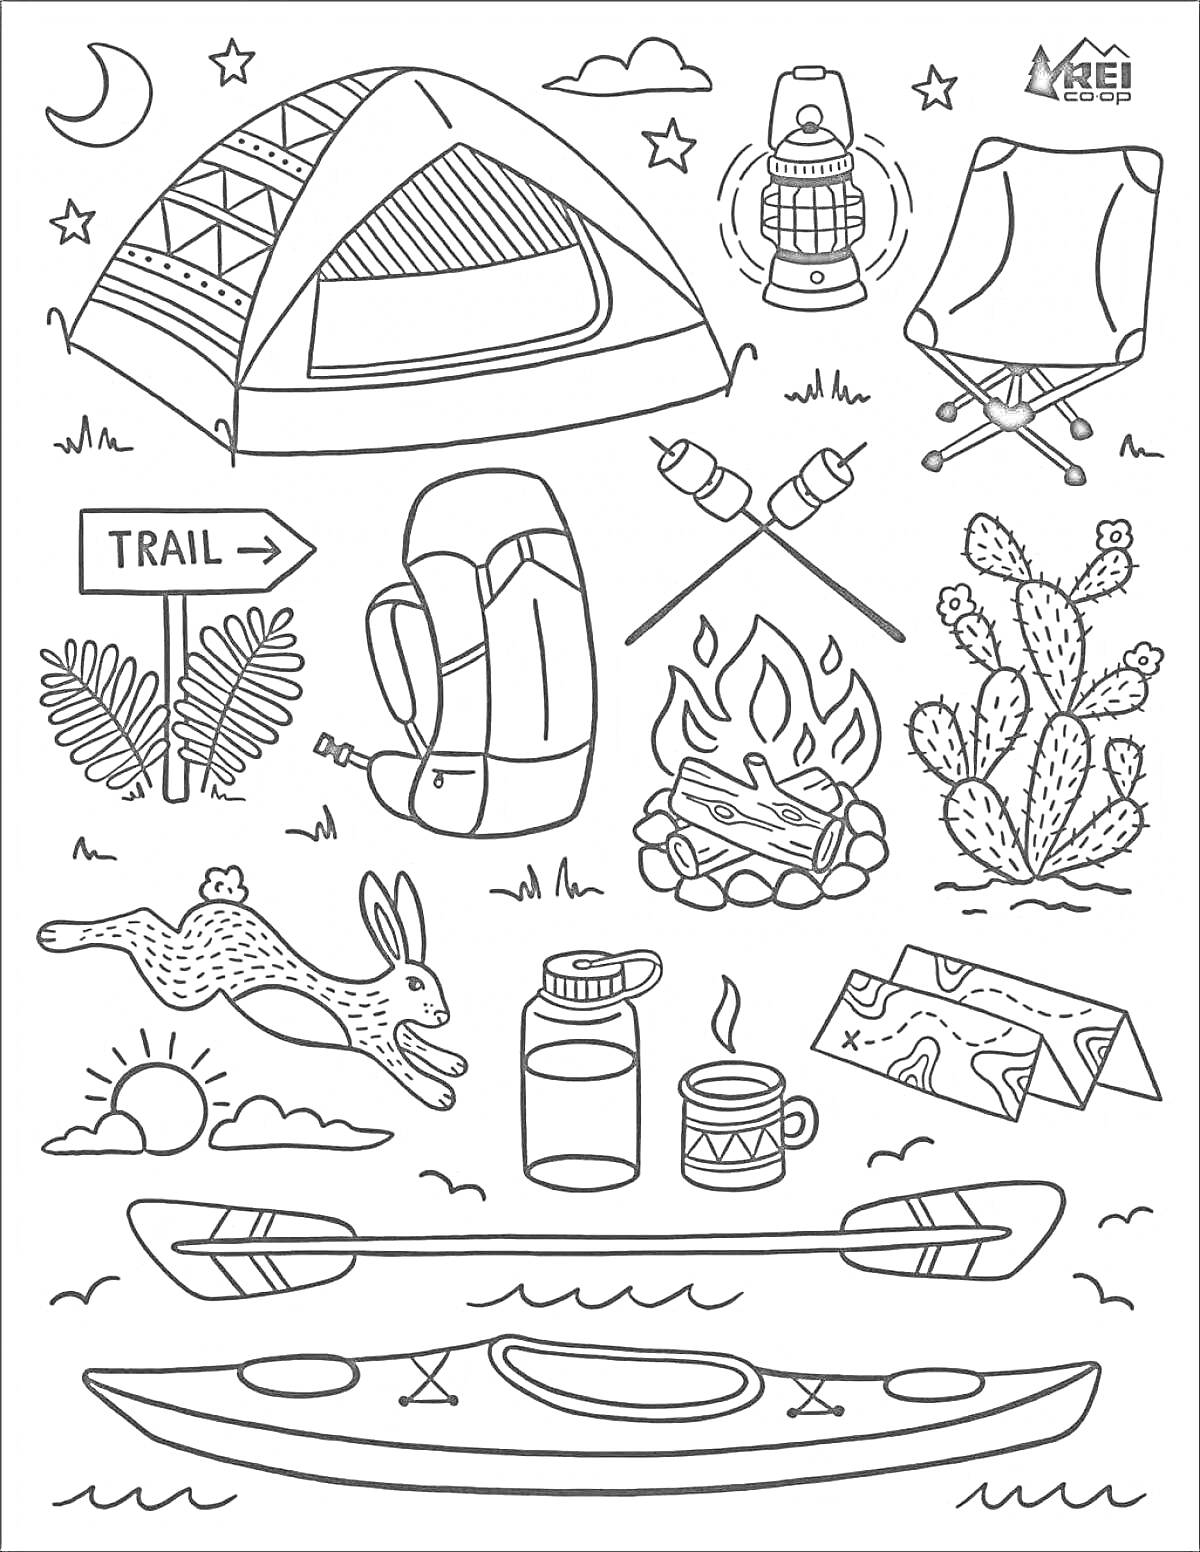 РаскраскаРаскраска с элементами похода: палатка, звезды, луна, облака, фонарик, стул, указатель 